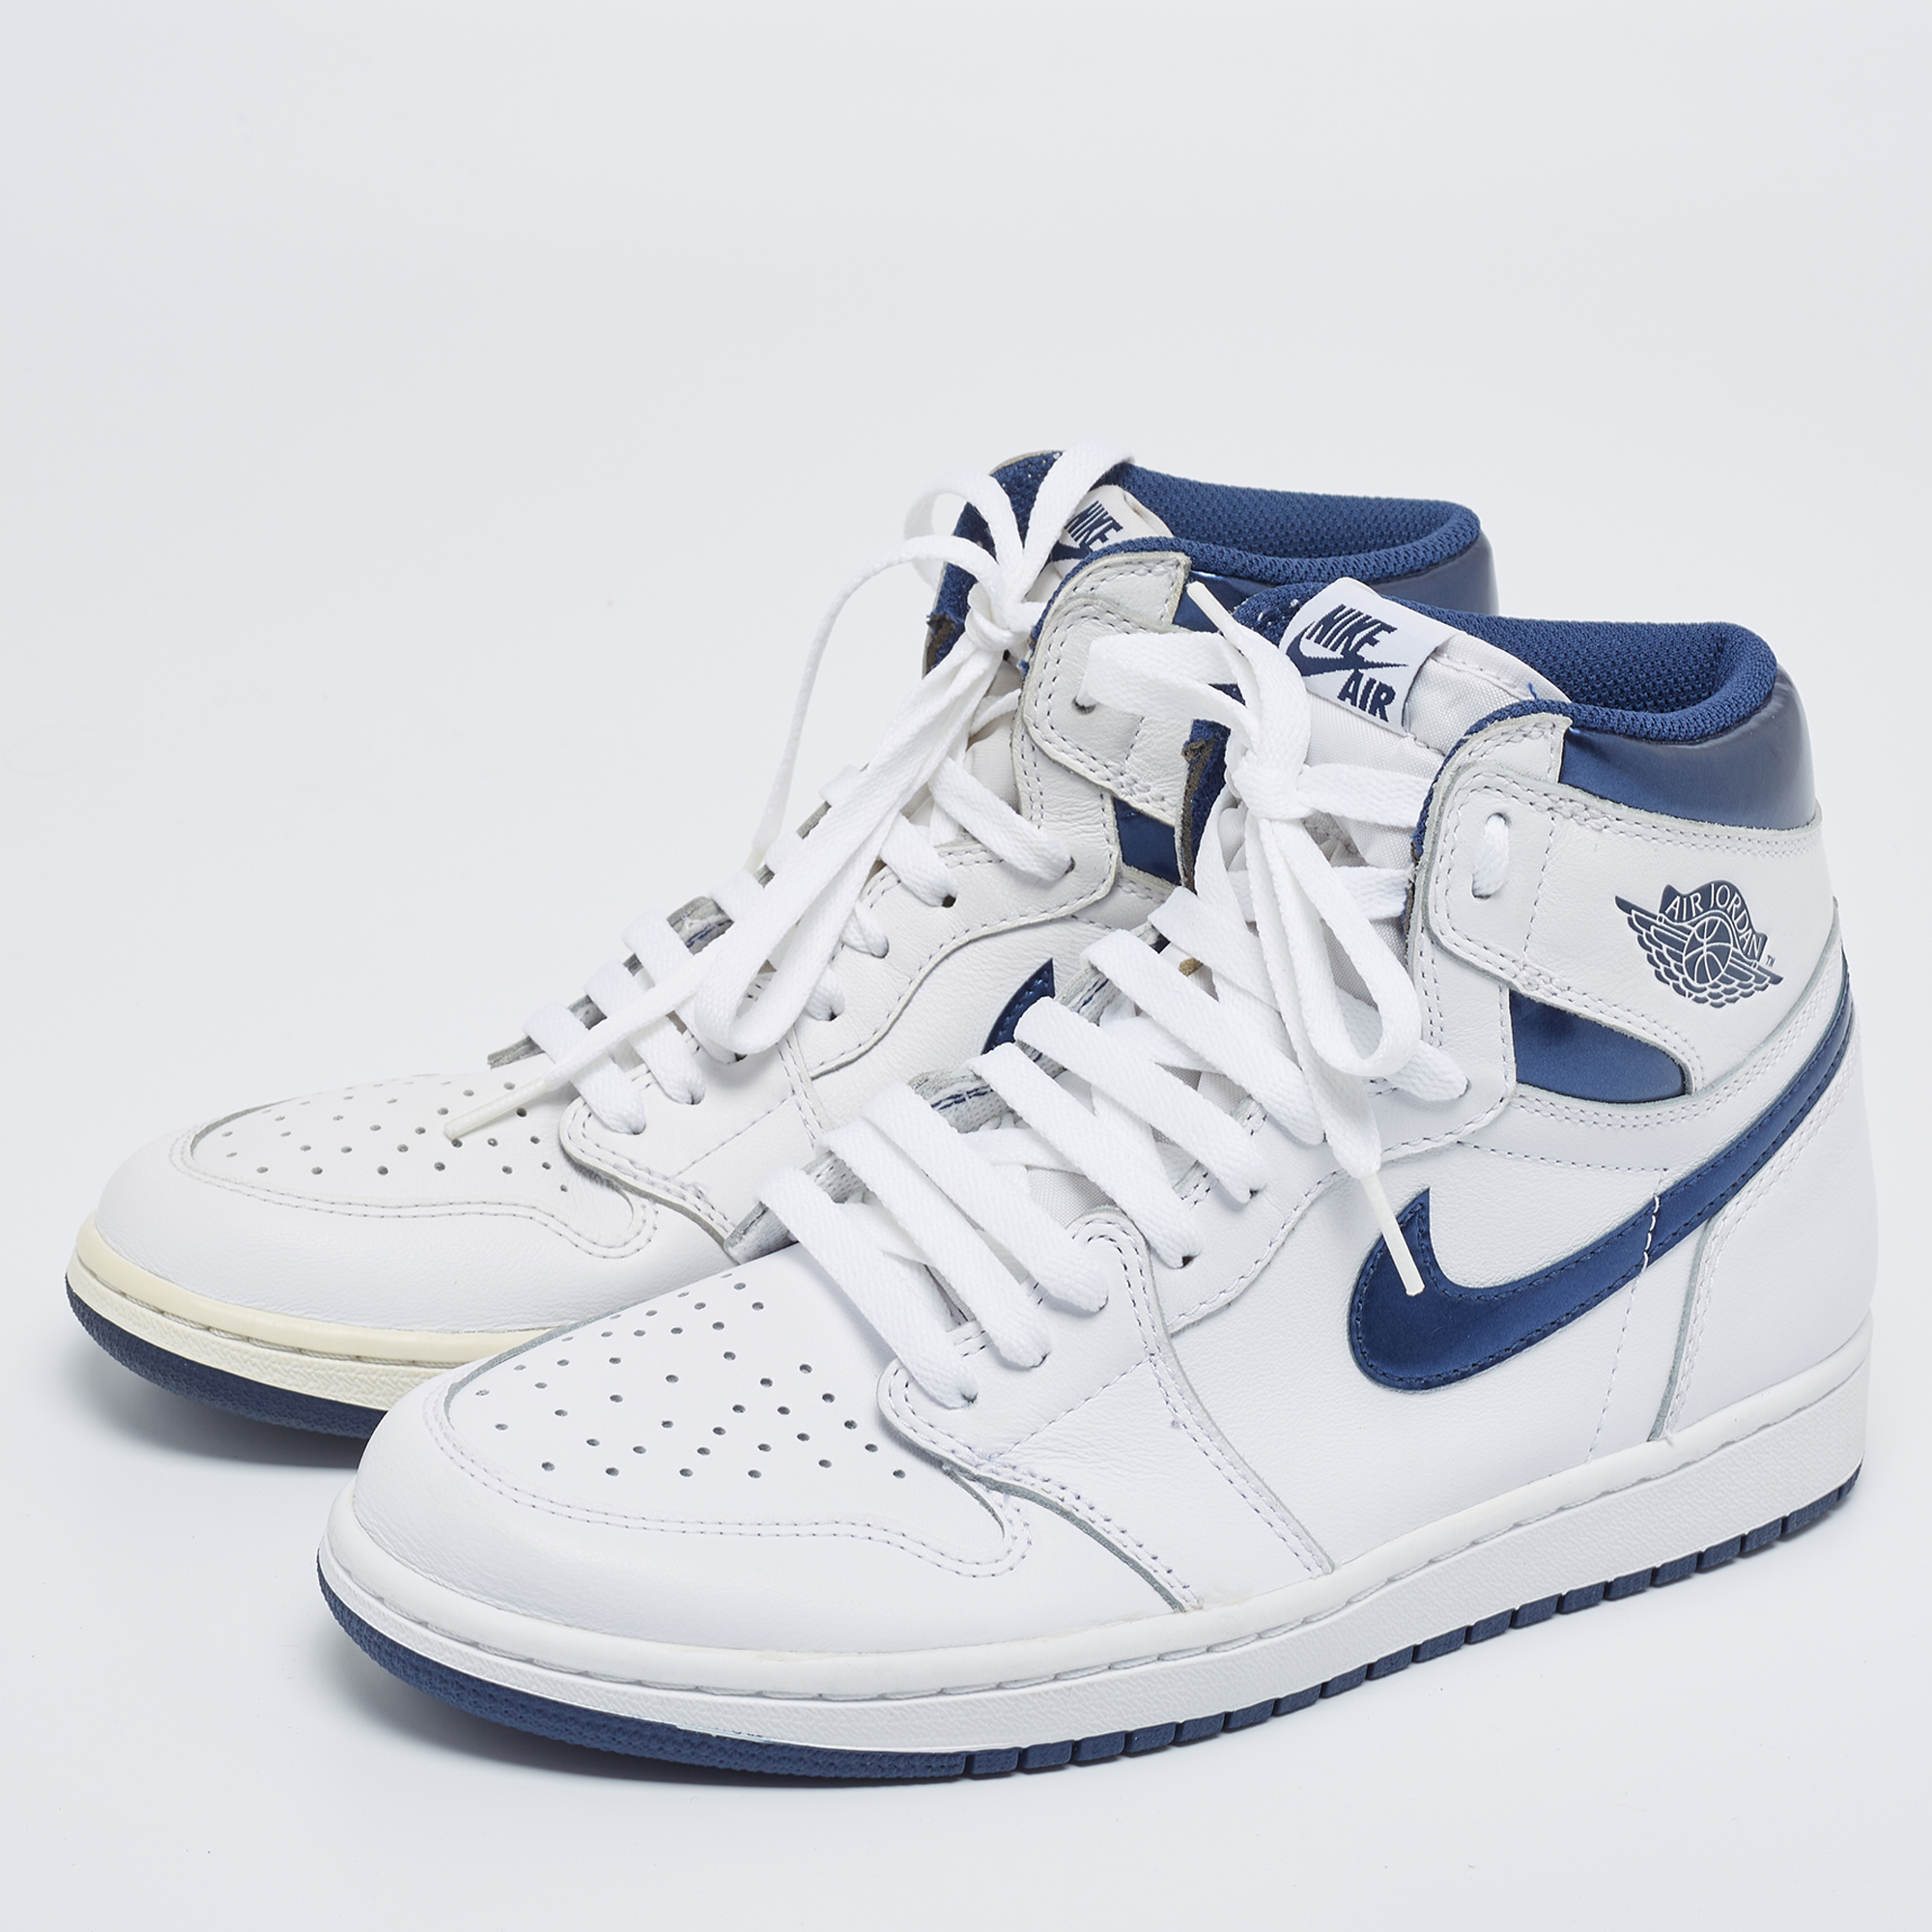 

Air Jordans White/Metallic Navy Blue Leather Jordan 1 Retro High OG Sneakers Size